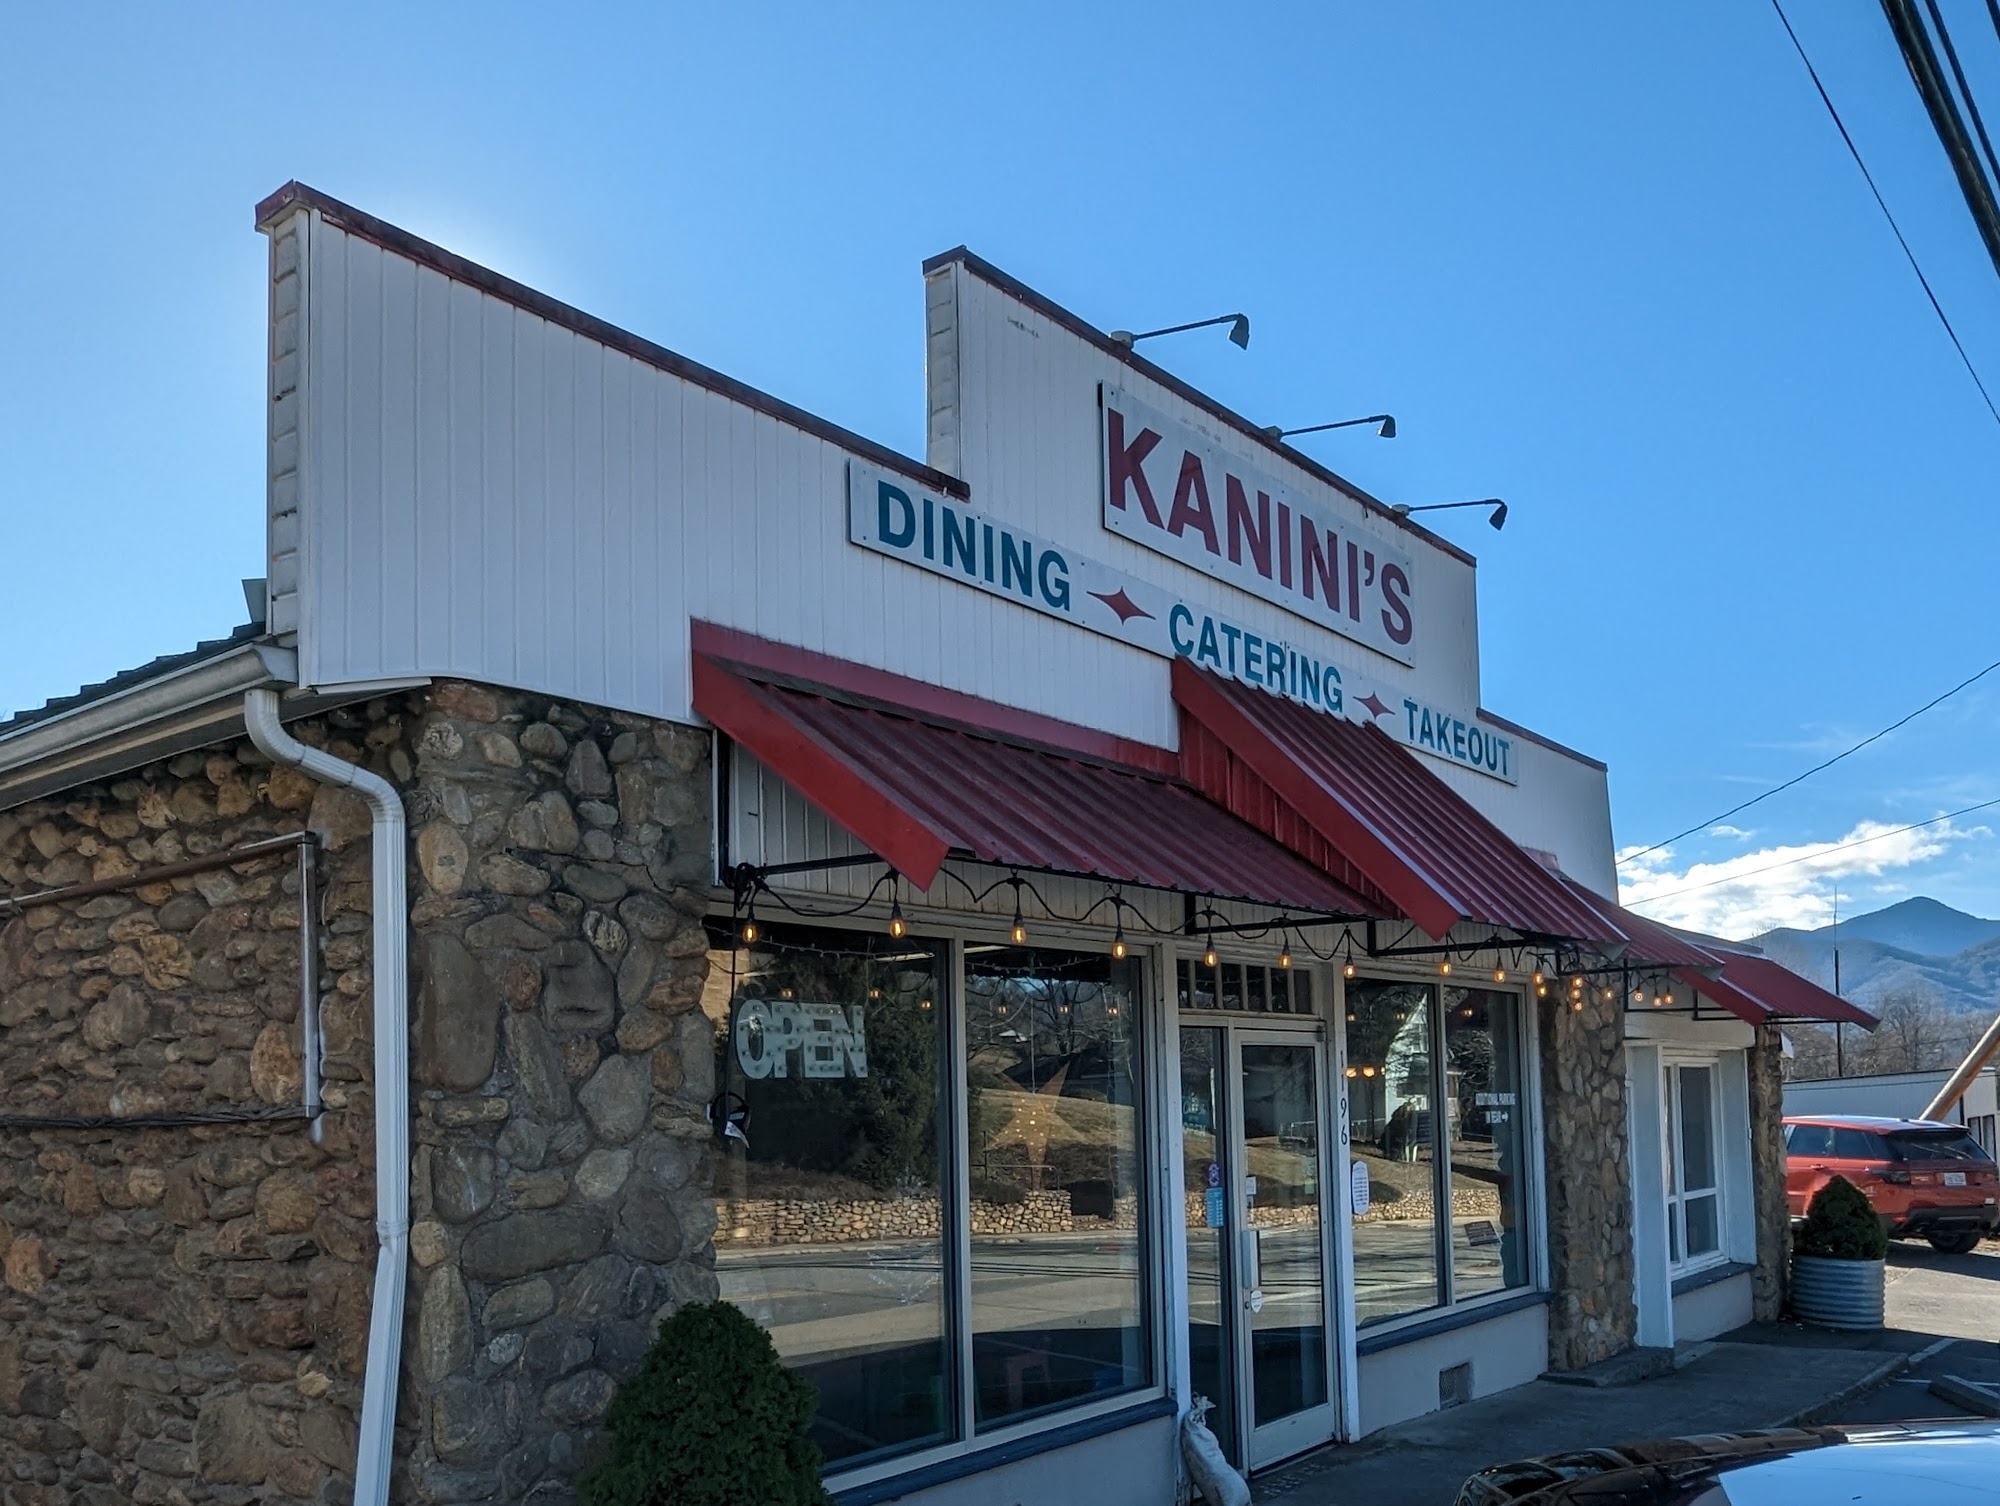 Kanini's Restaurant & Catering